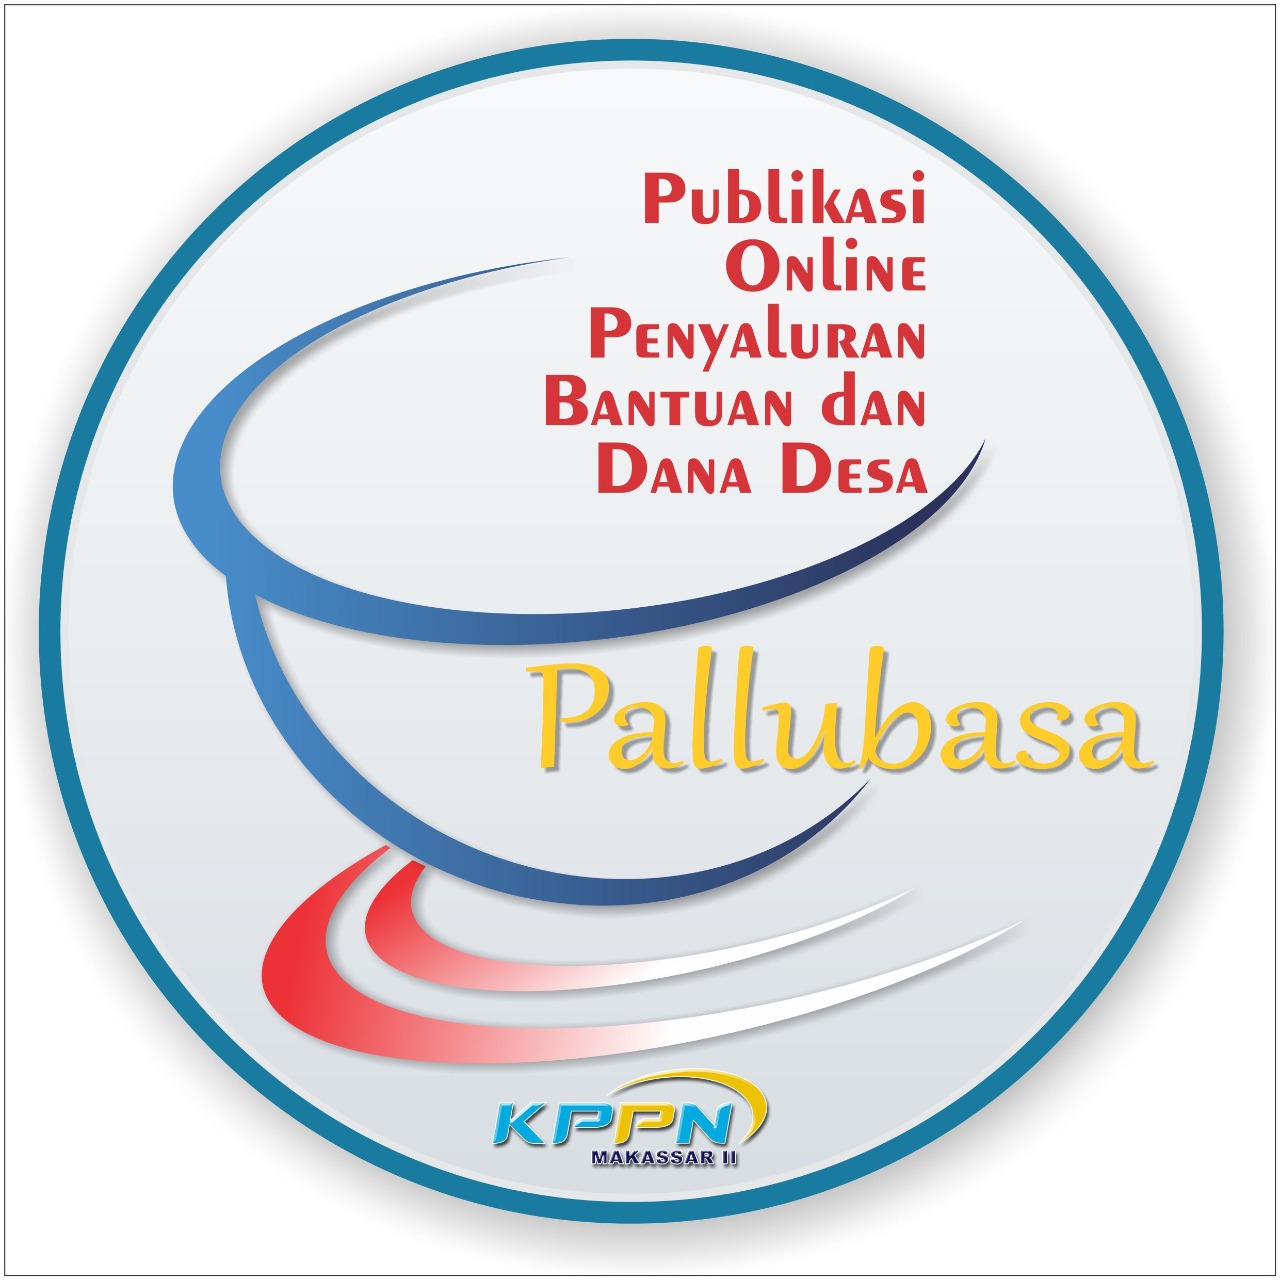 Pallubasa - Publikasi Online Penyaluran Bantuan dan Dana Desa KPPN Makassar II